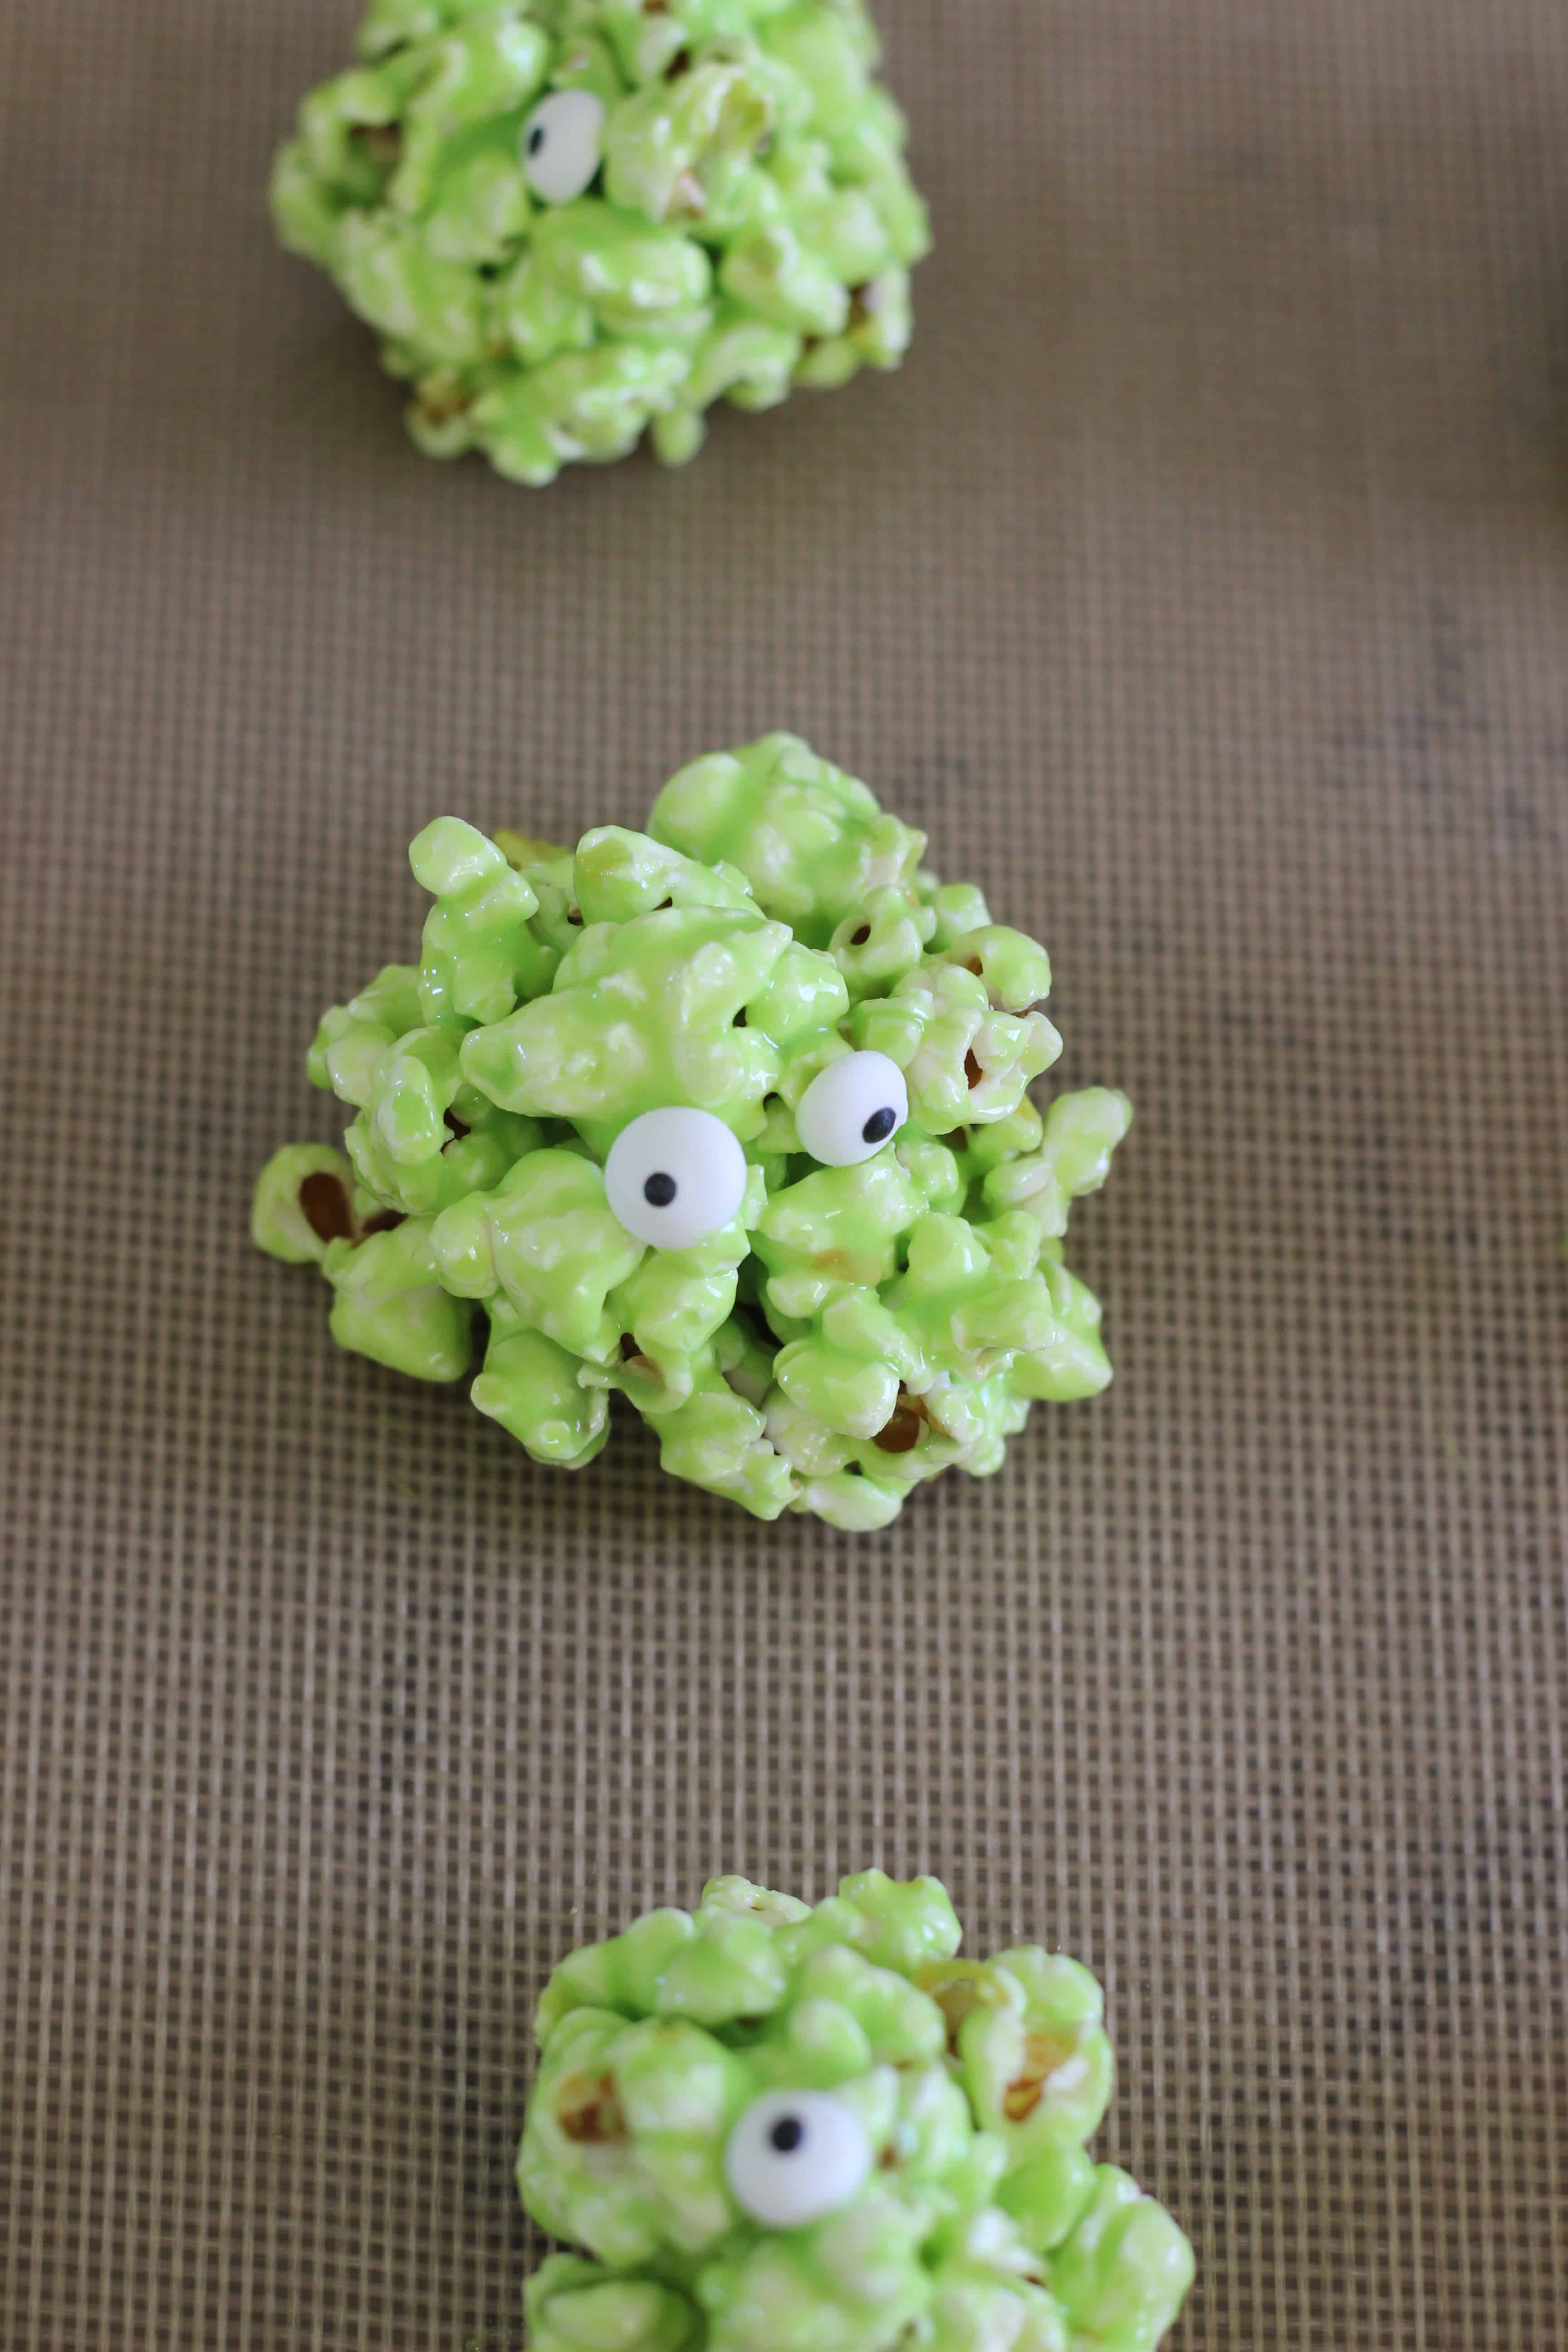 Green popcorn marshmallow slime ball with candy eyeballs